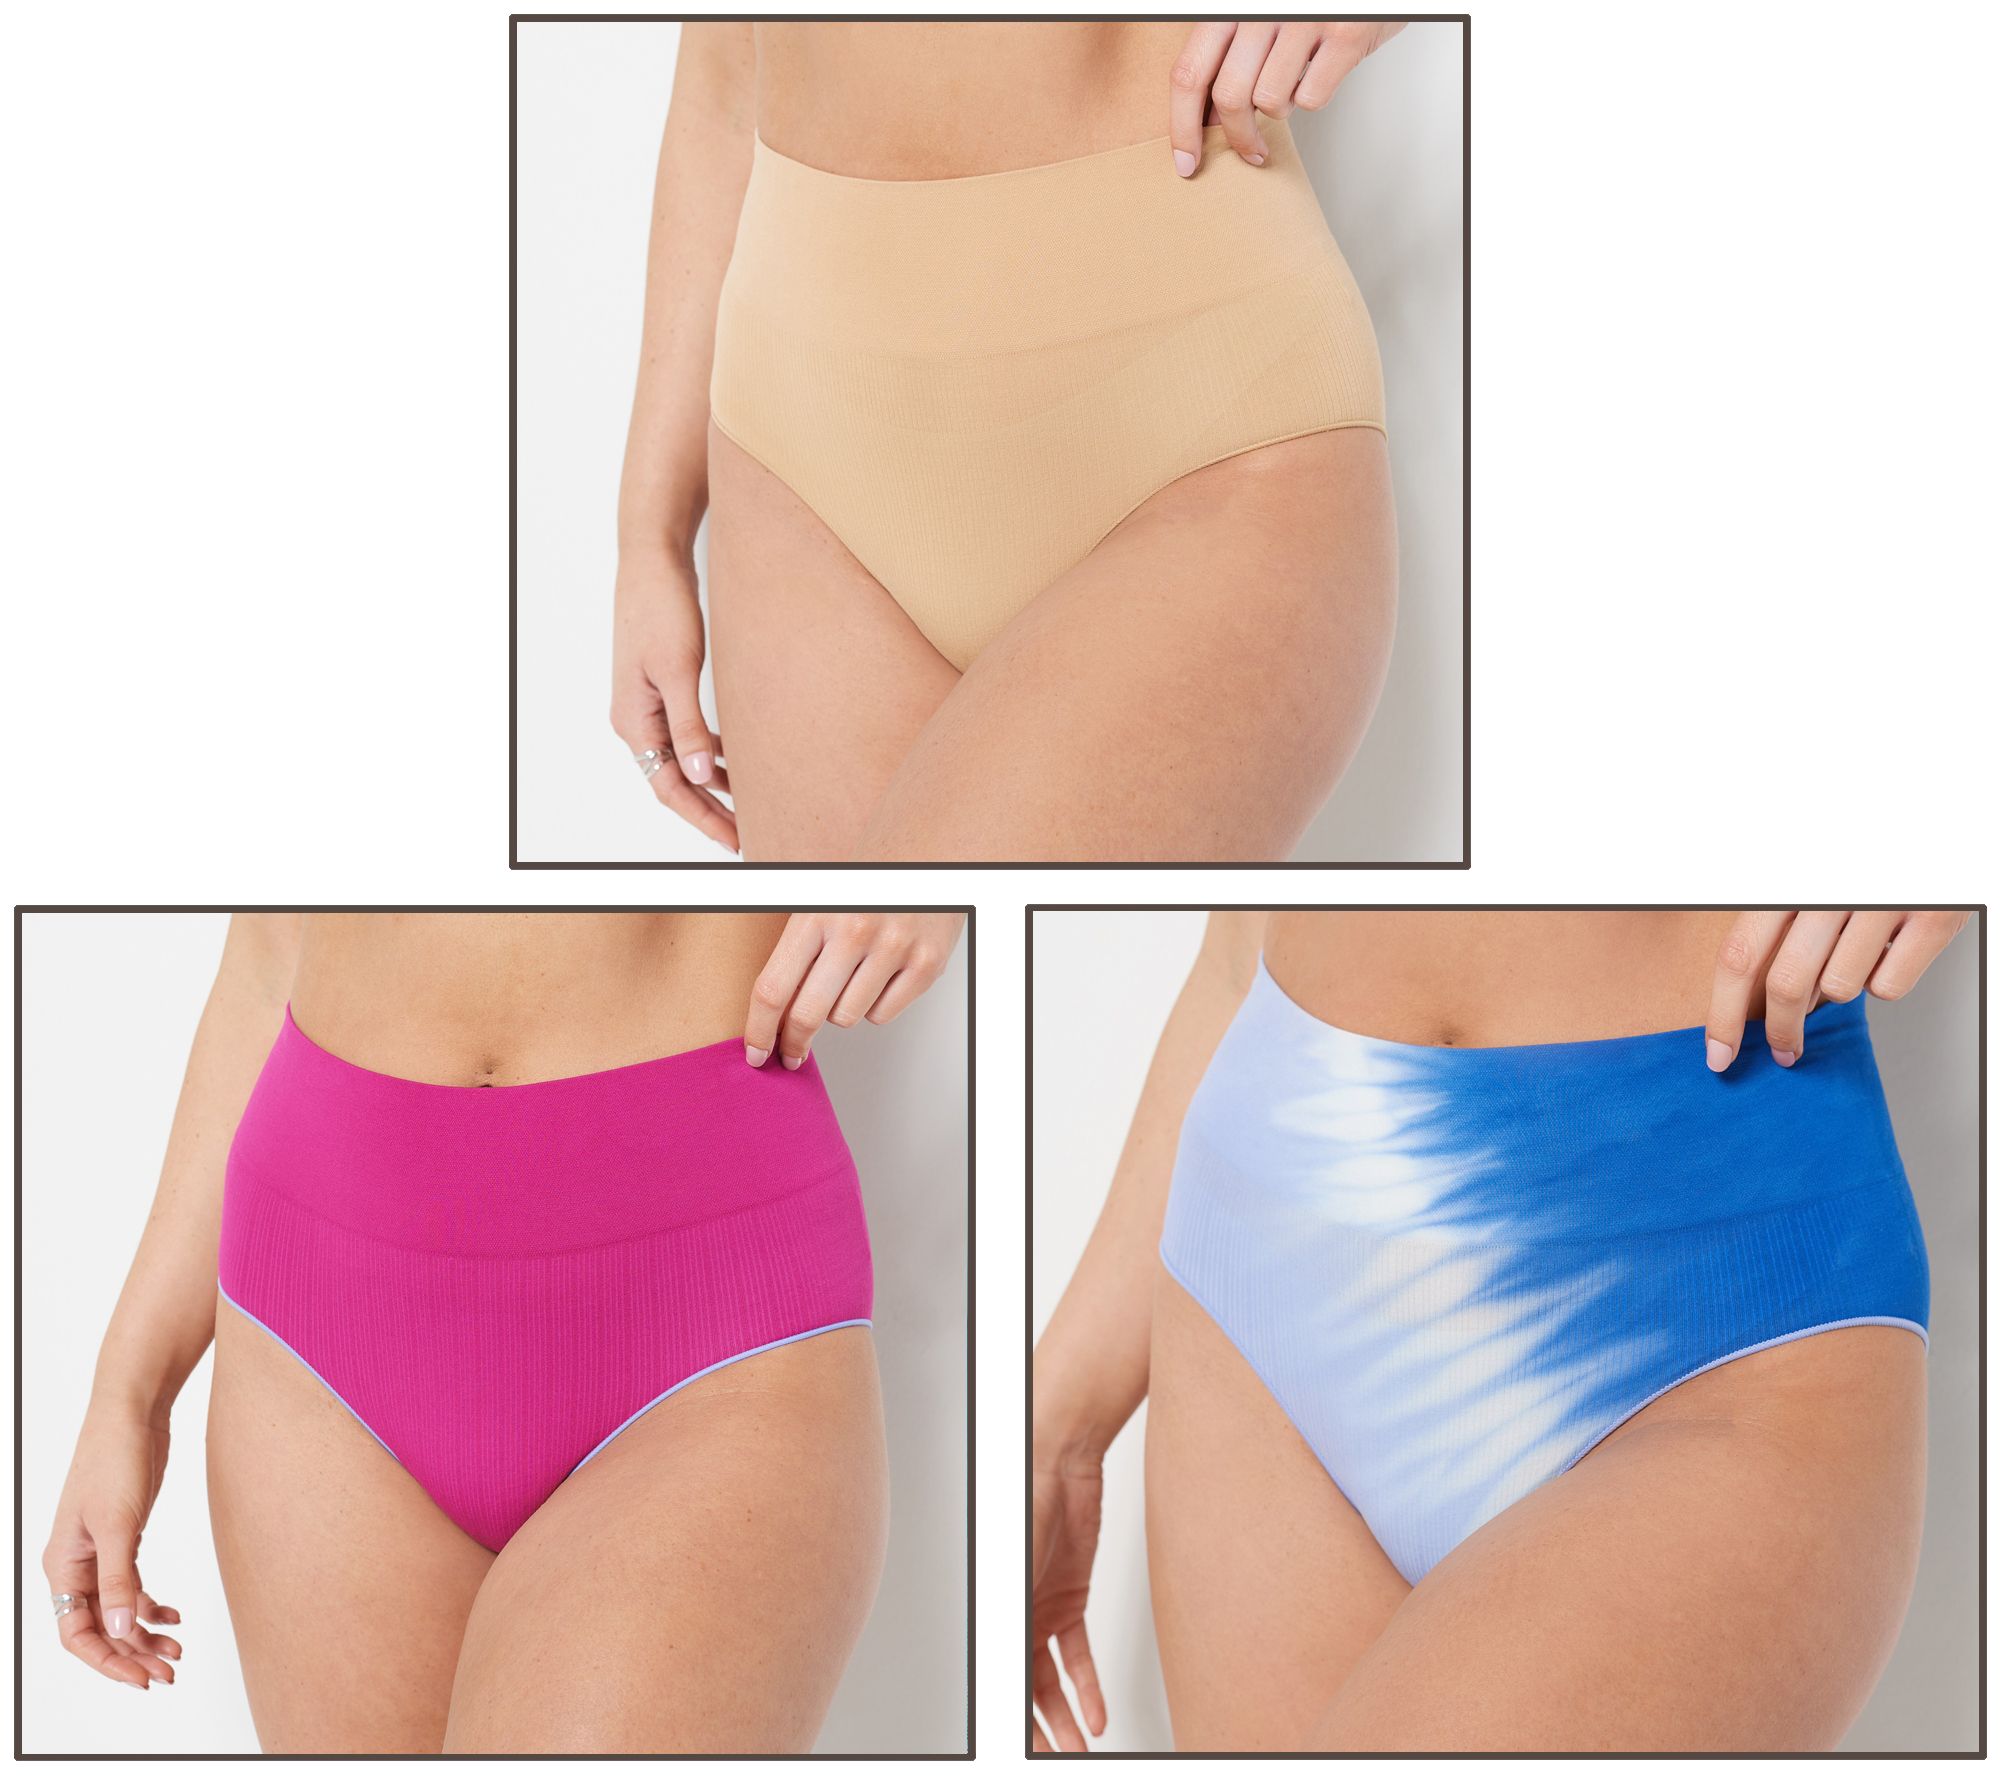 Bombas Women's Cotton Modal Blend Lace Hipster - Plus Size Underwear 6-Pack  - Spring Mix - 2X - ShopStyle Panties